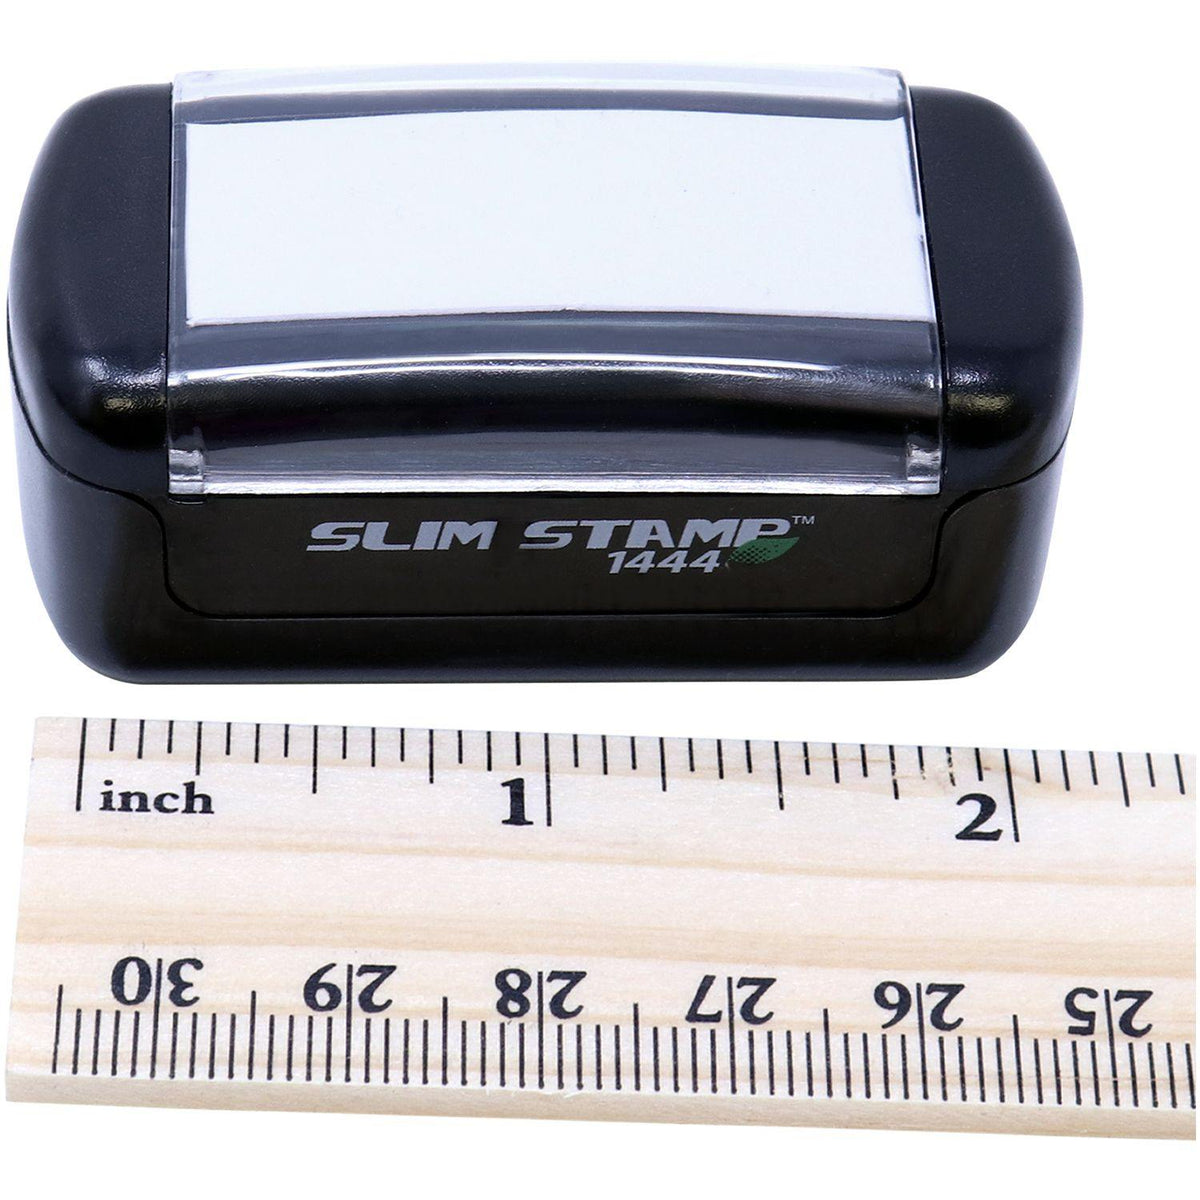 Measurement Slim Pre-Inked Temporarily Away Stamp with Ruler